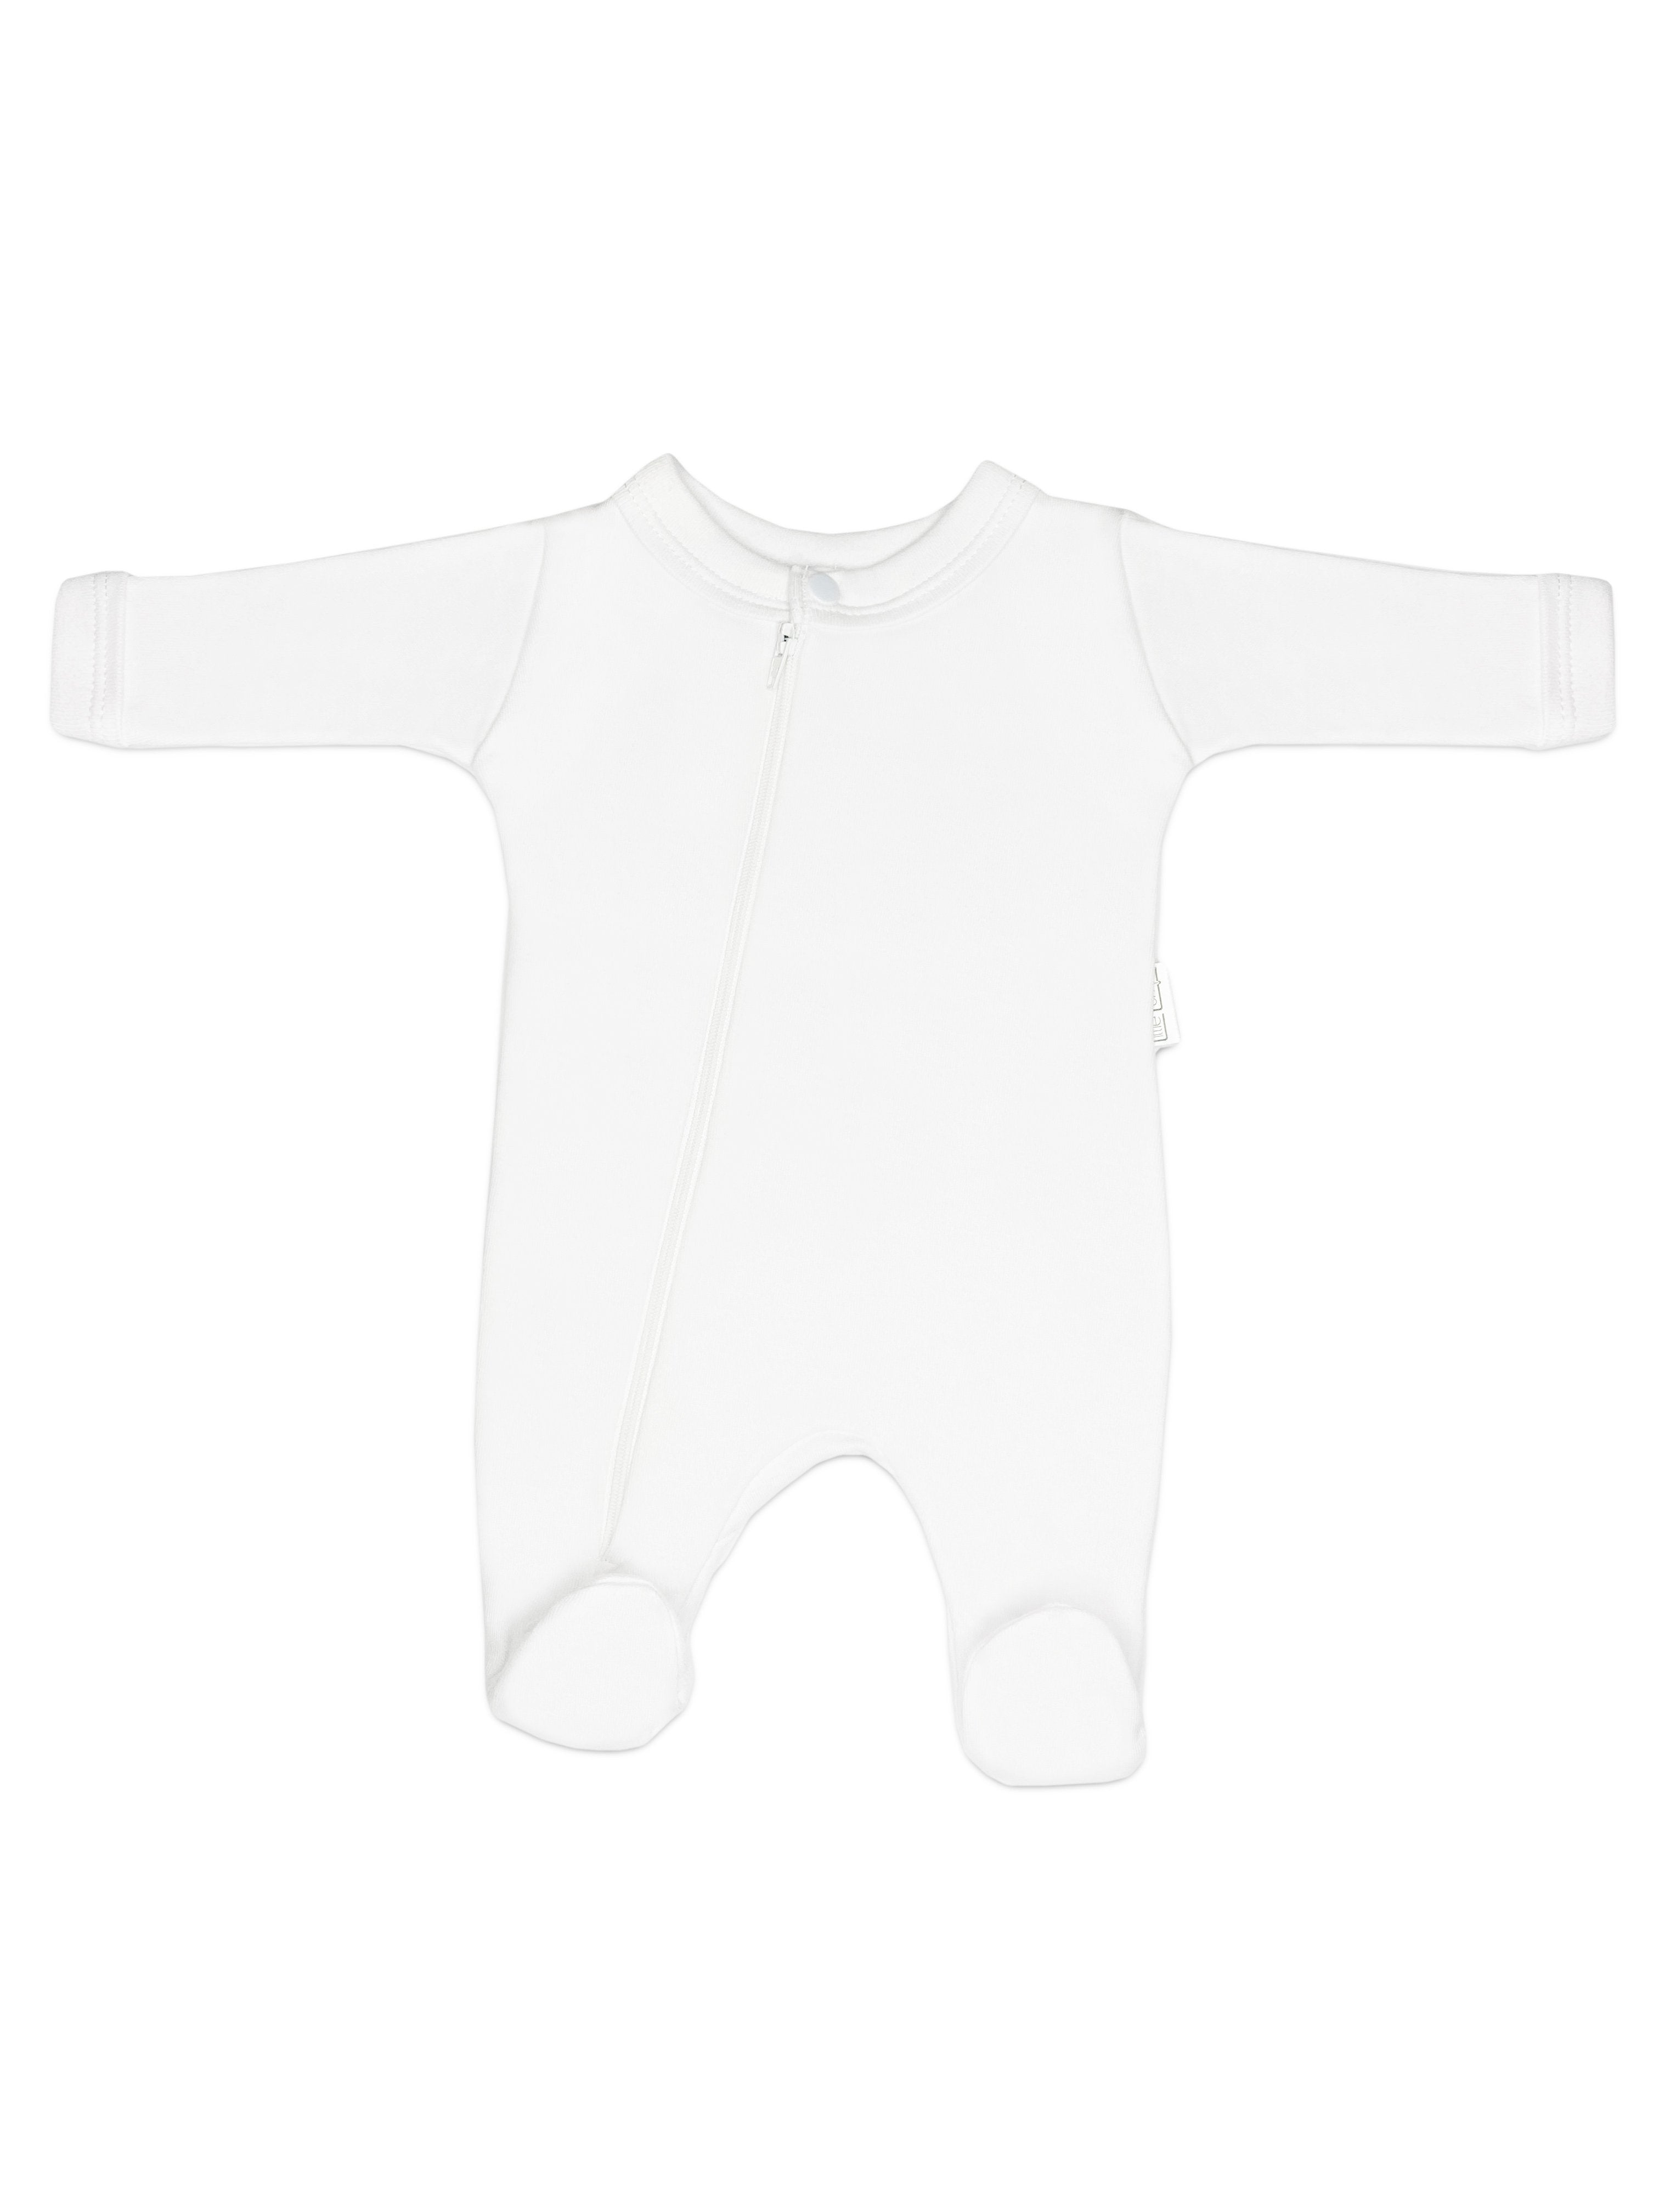 100% Cotton Footed Zip Up Sleepsuit - White - Sleepsuit / Babygrow - Little Lumps